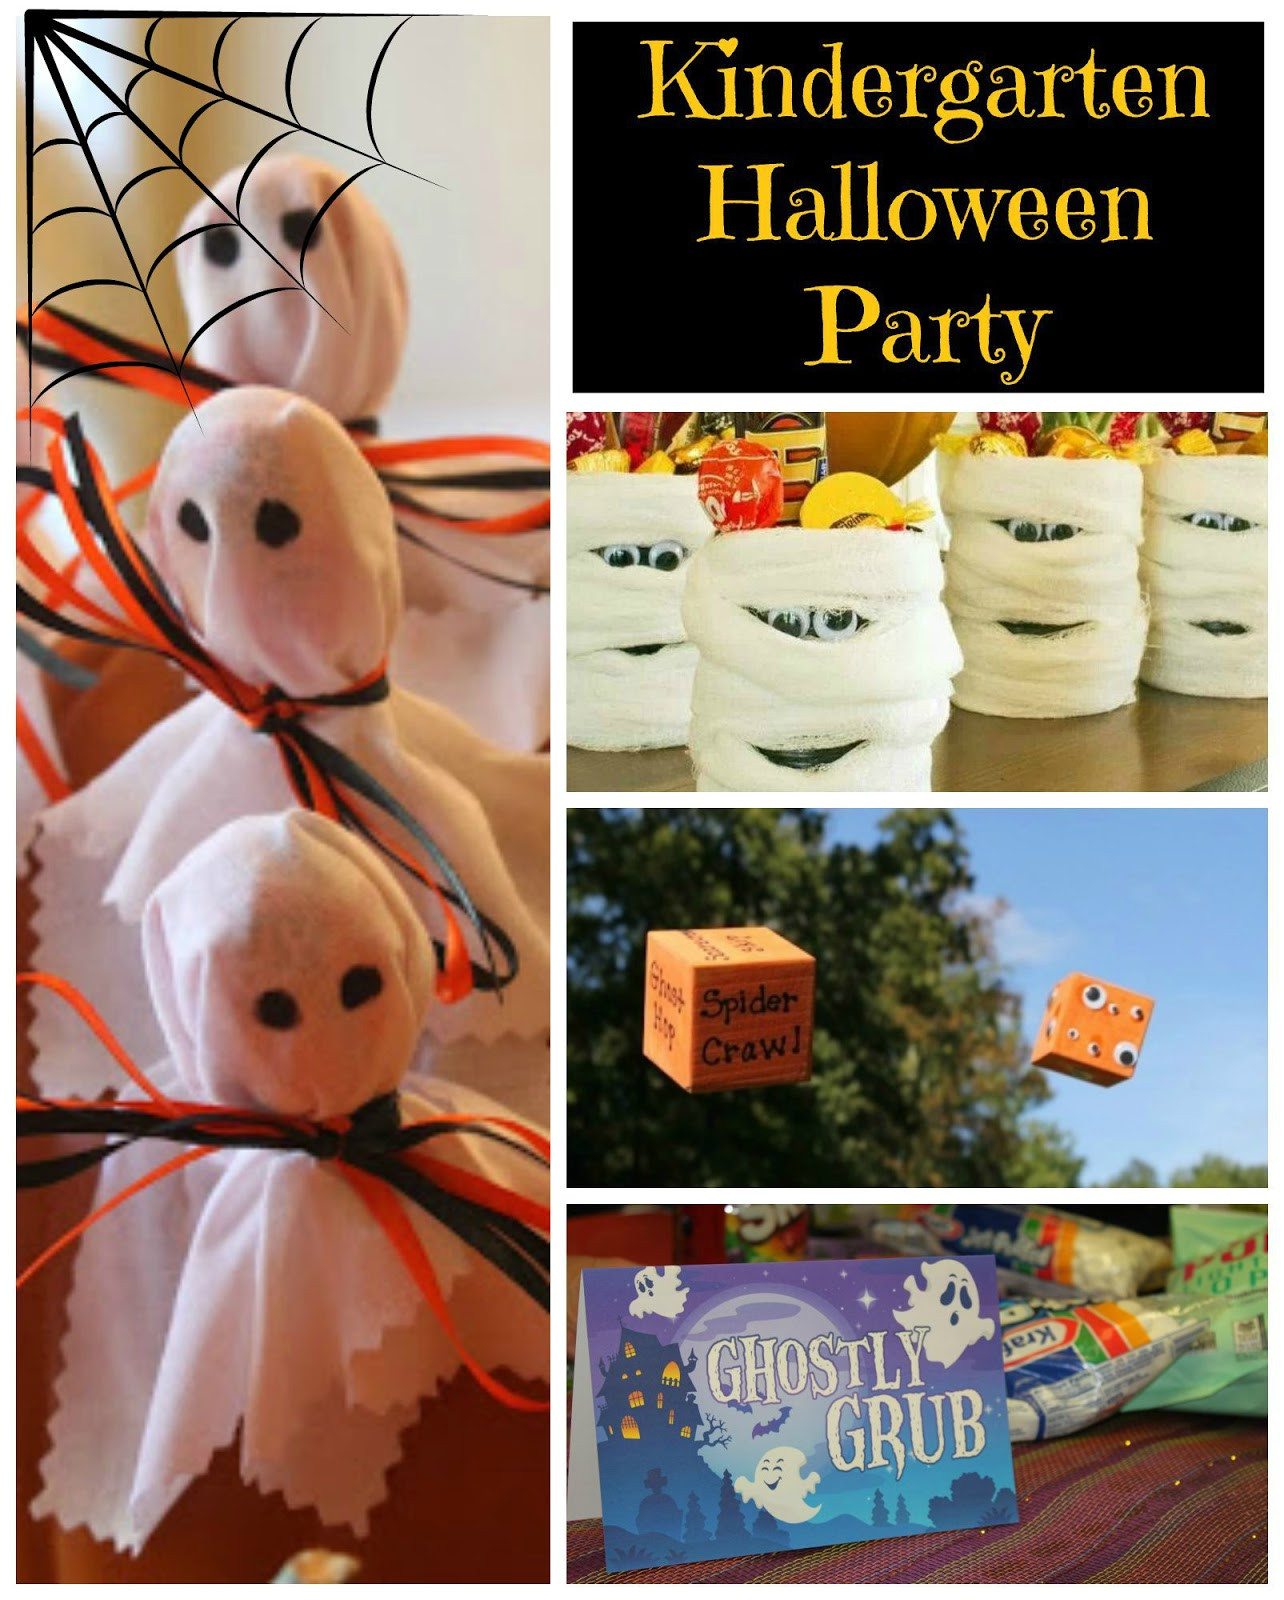 Preschool Halloween Party Game Ideas
 Keeping up with the Kiddos Kindergarten Halloween Party